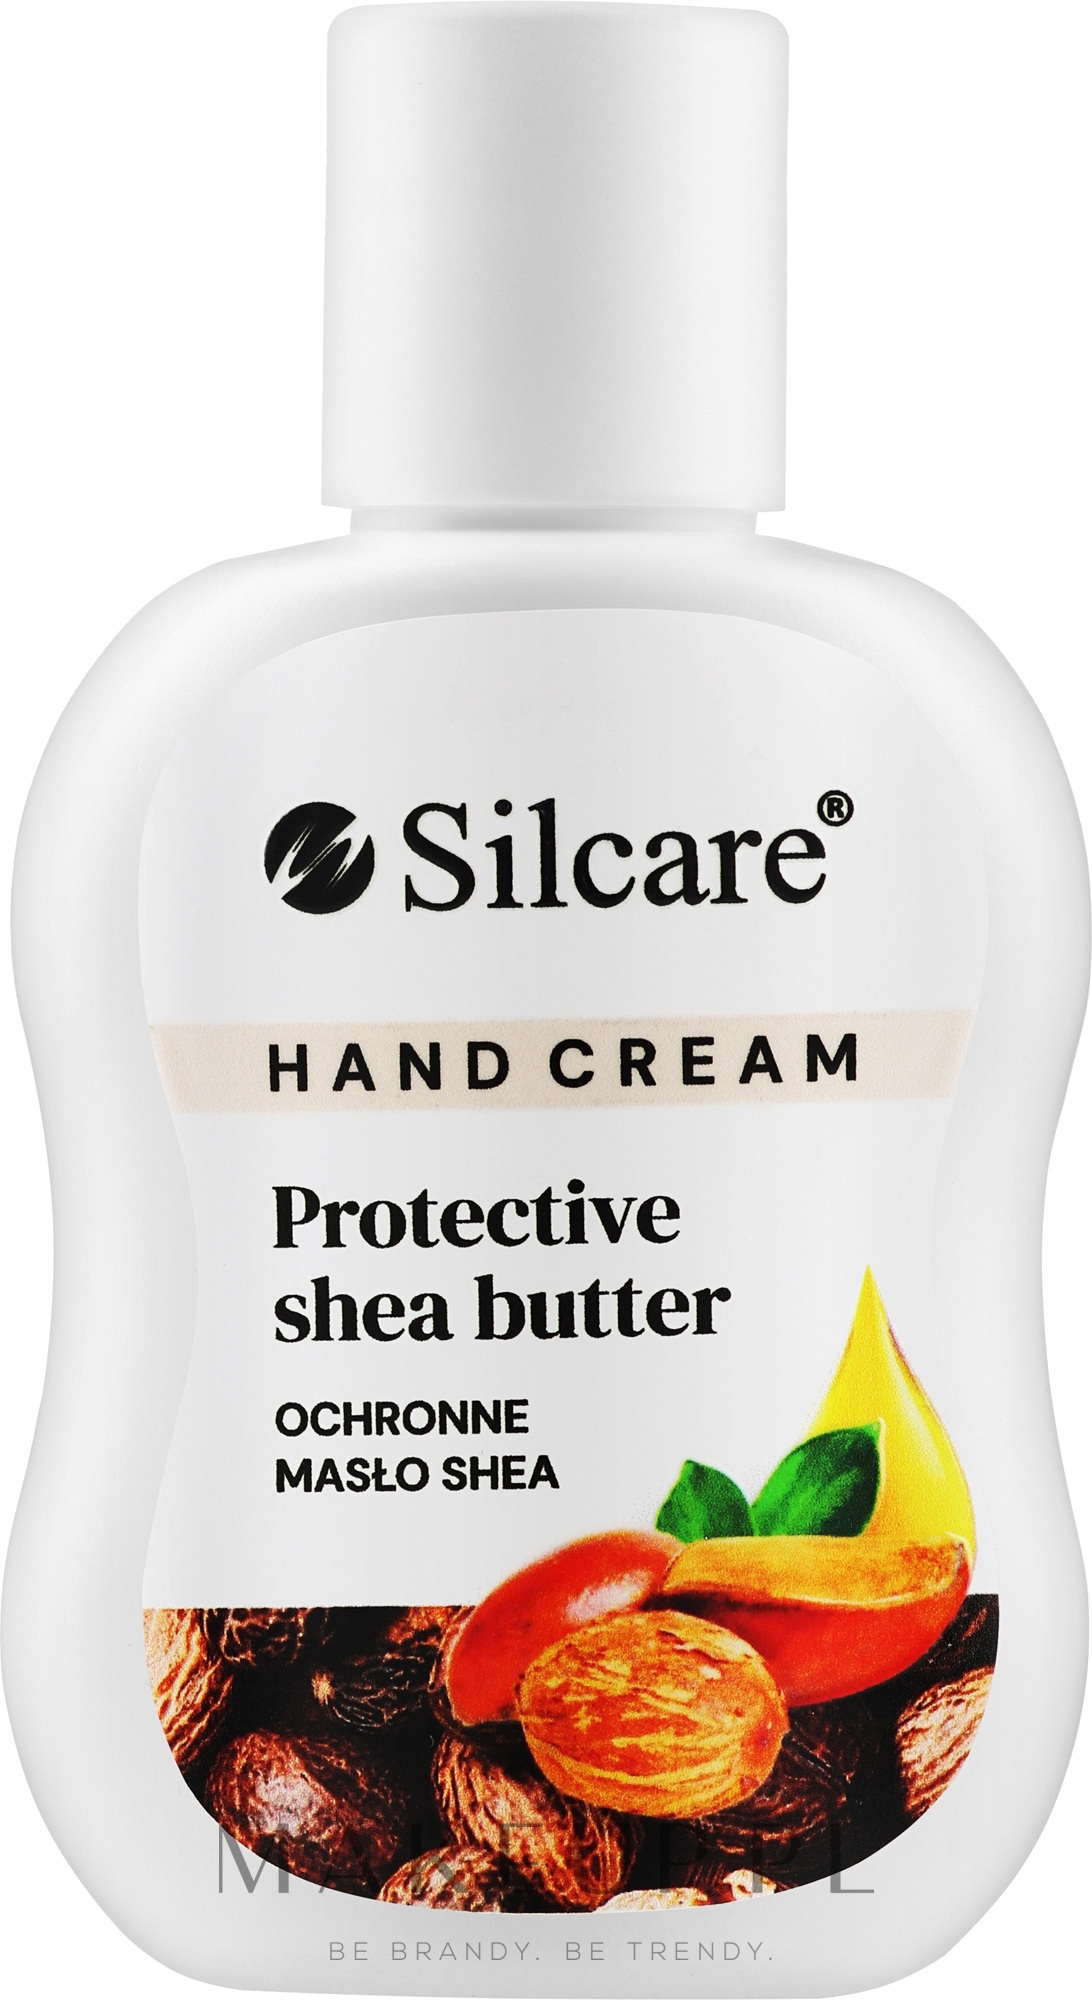 Ochronny krem do rąk z masłem shea - Silcare Protective Shea Butter Hand Cream  — Zdjęcie 100 ml